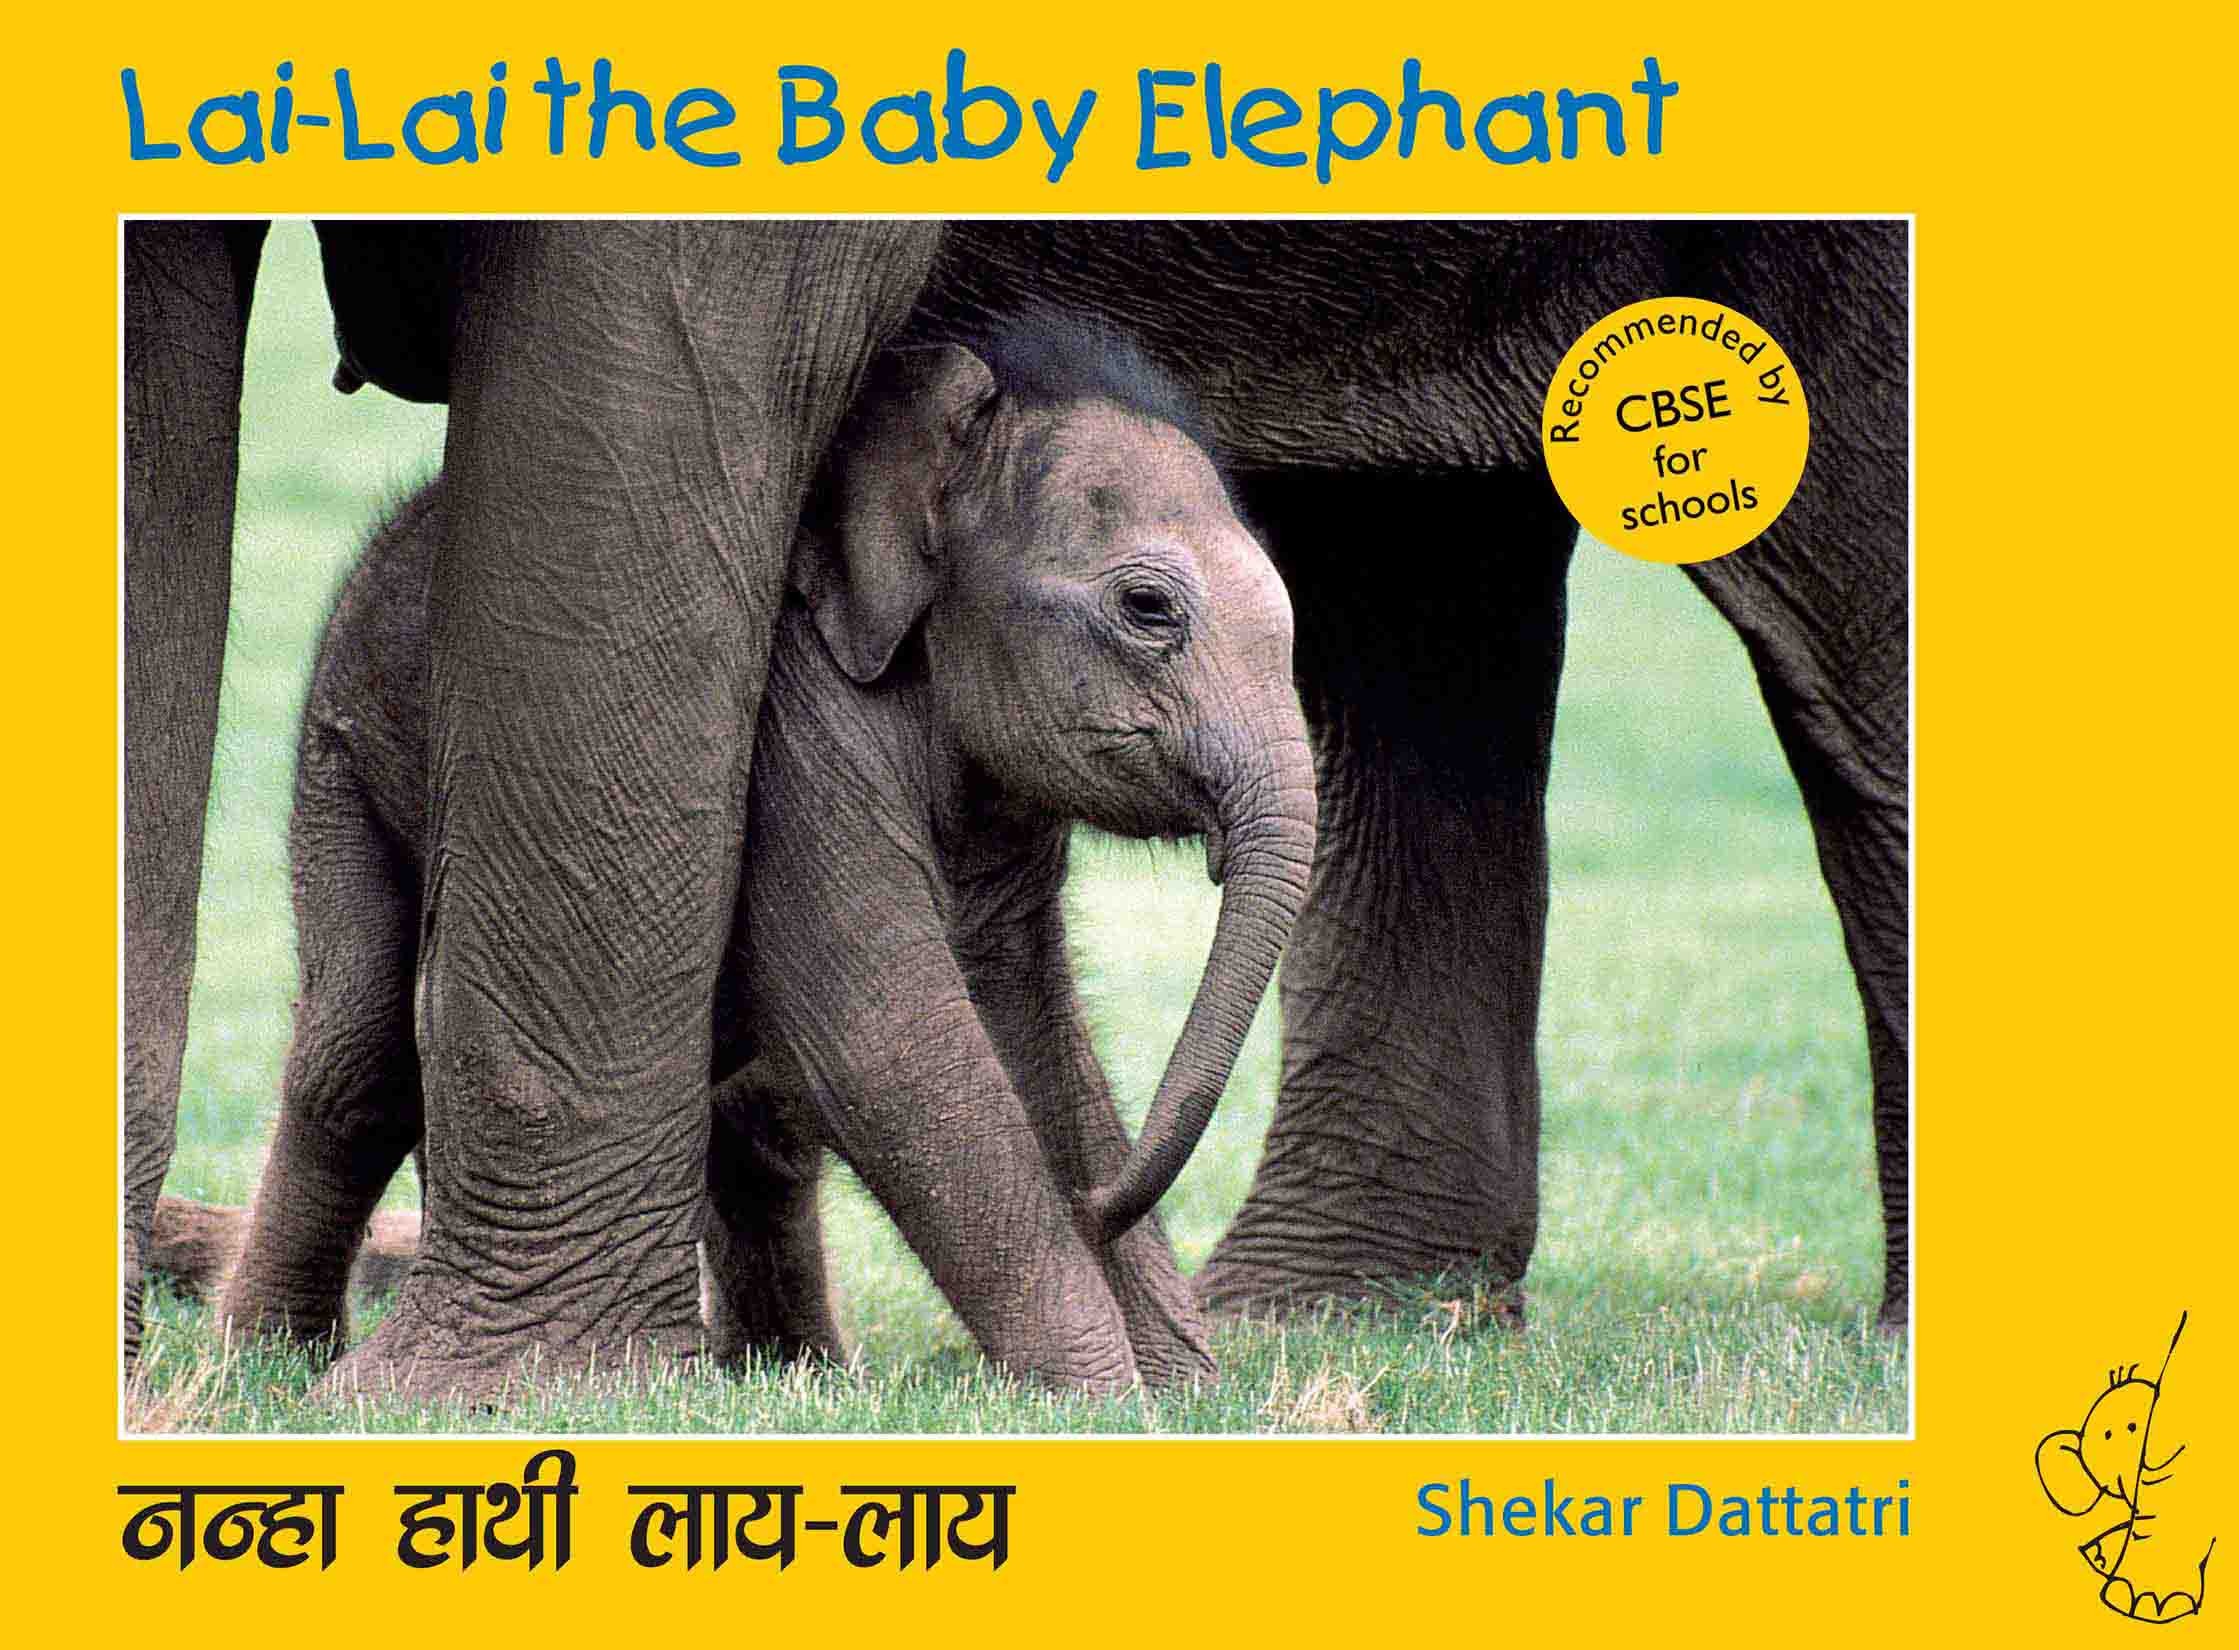 Lai-Lai The Baby Elephant/Nanha Hathi Lai-Lai (English-Hindi)